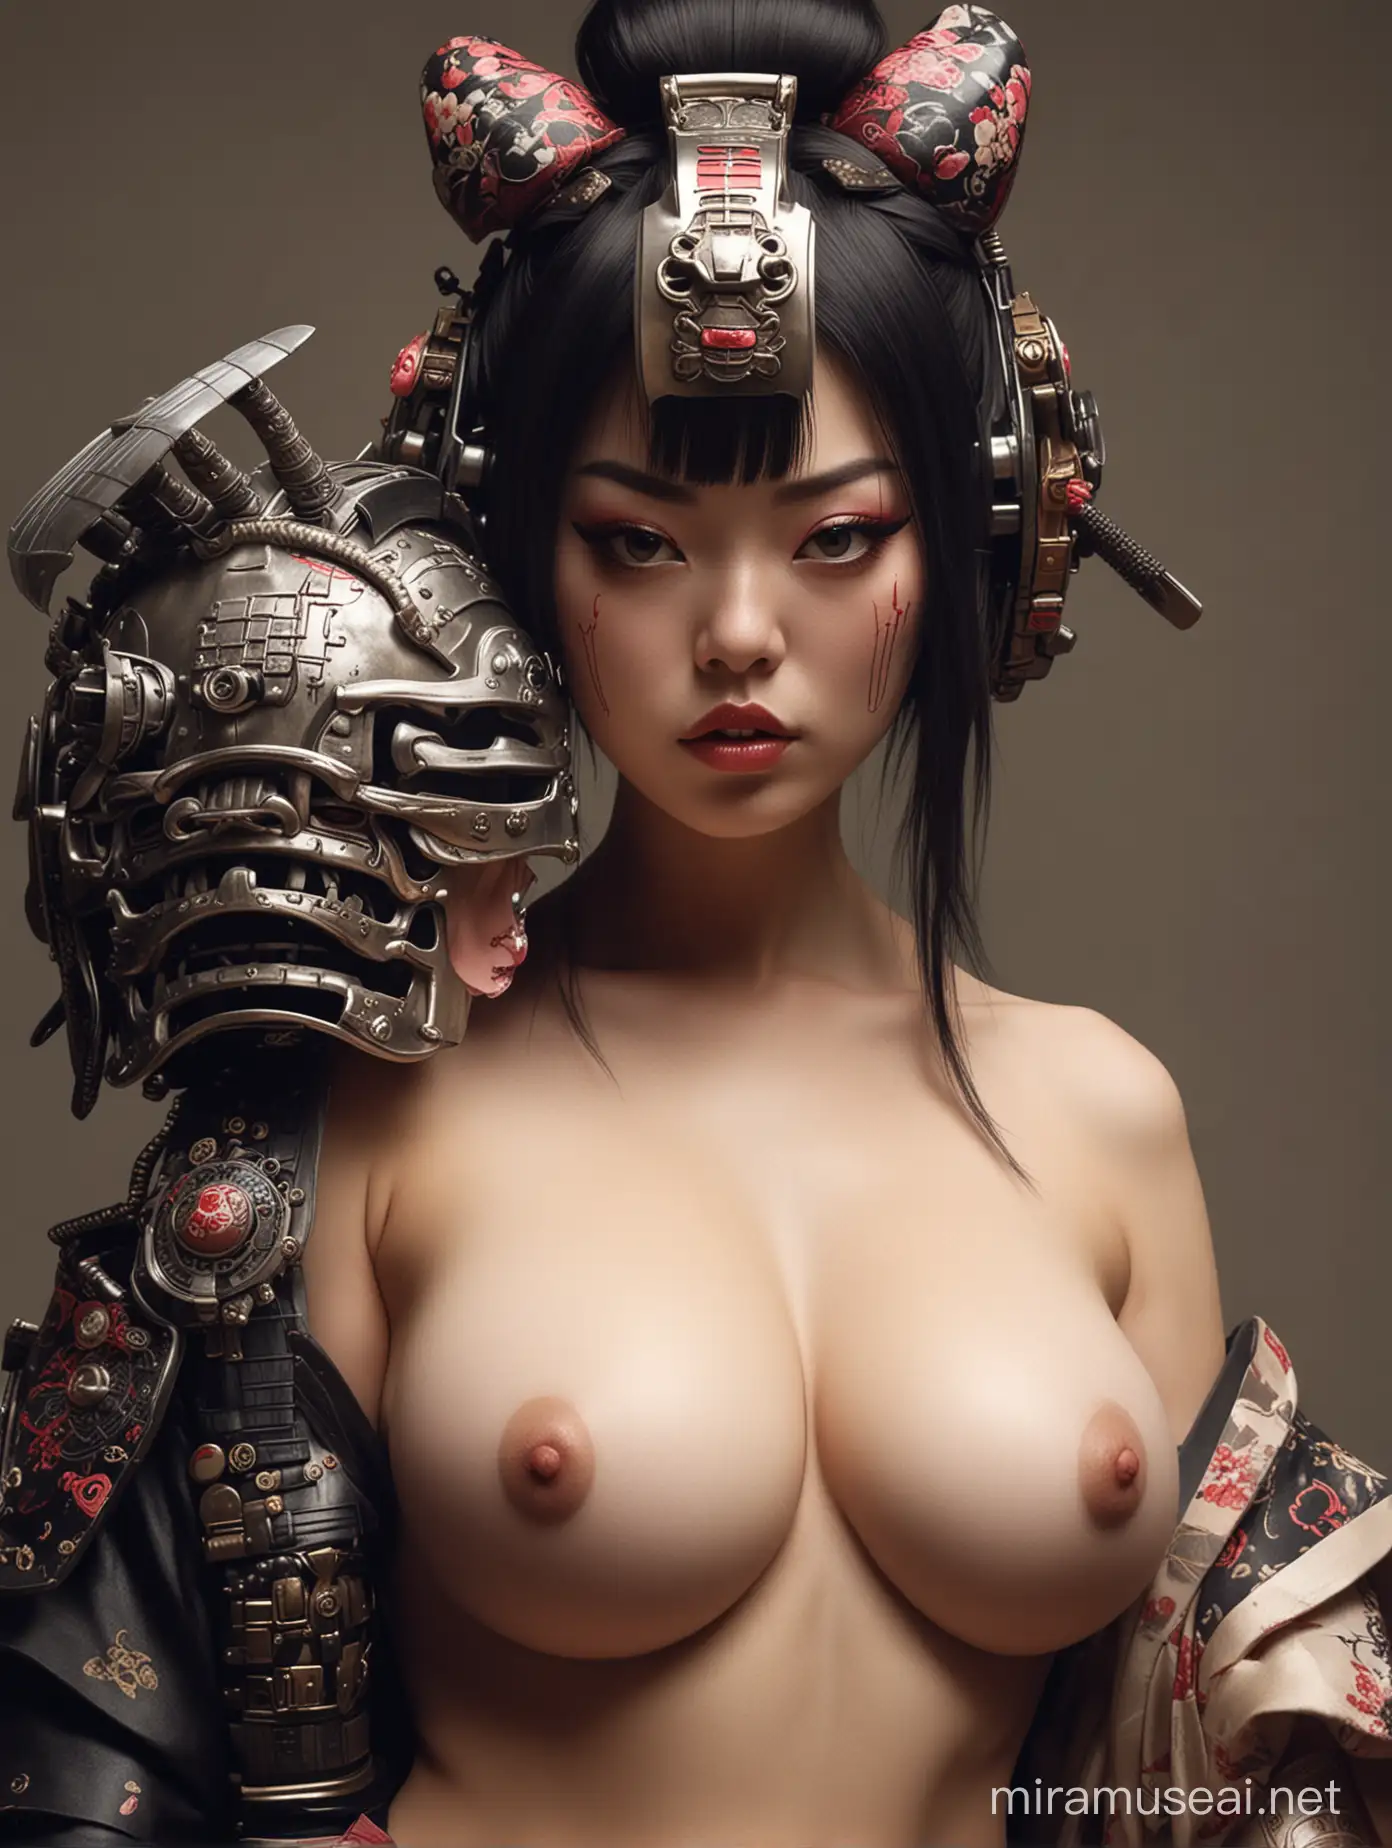 Nude Geisha with Samurai Helmet in CyberPunk Setting